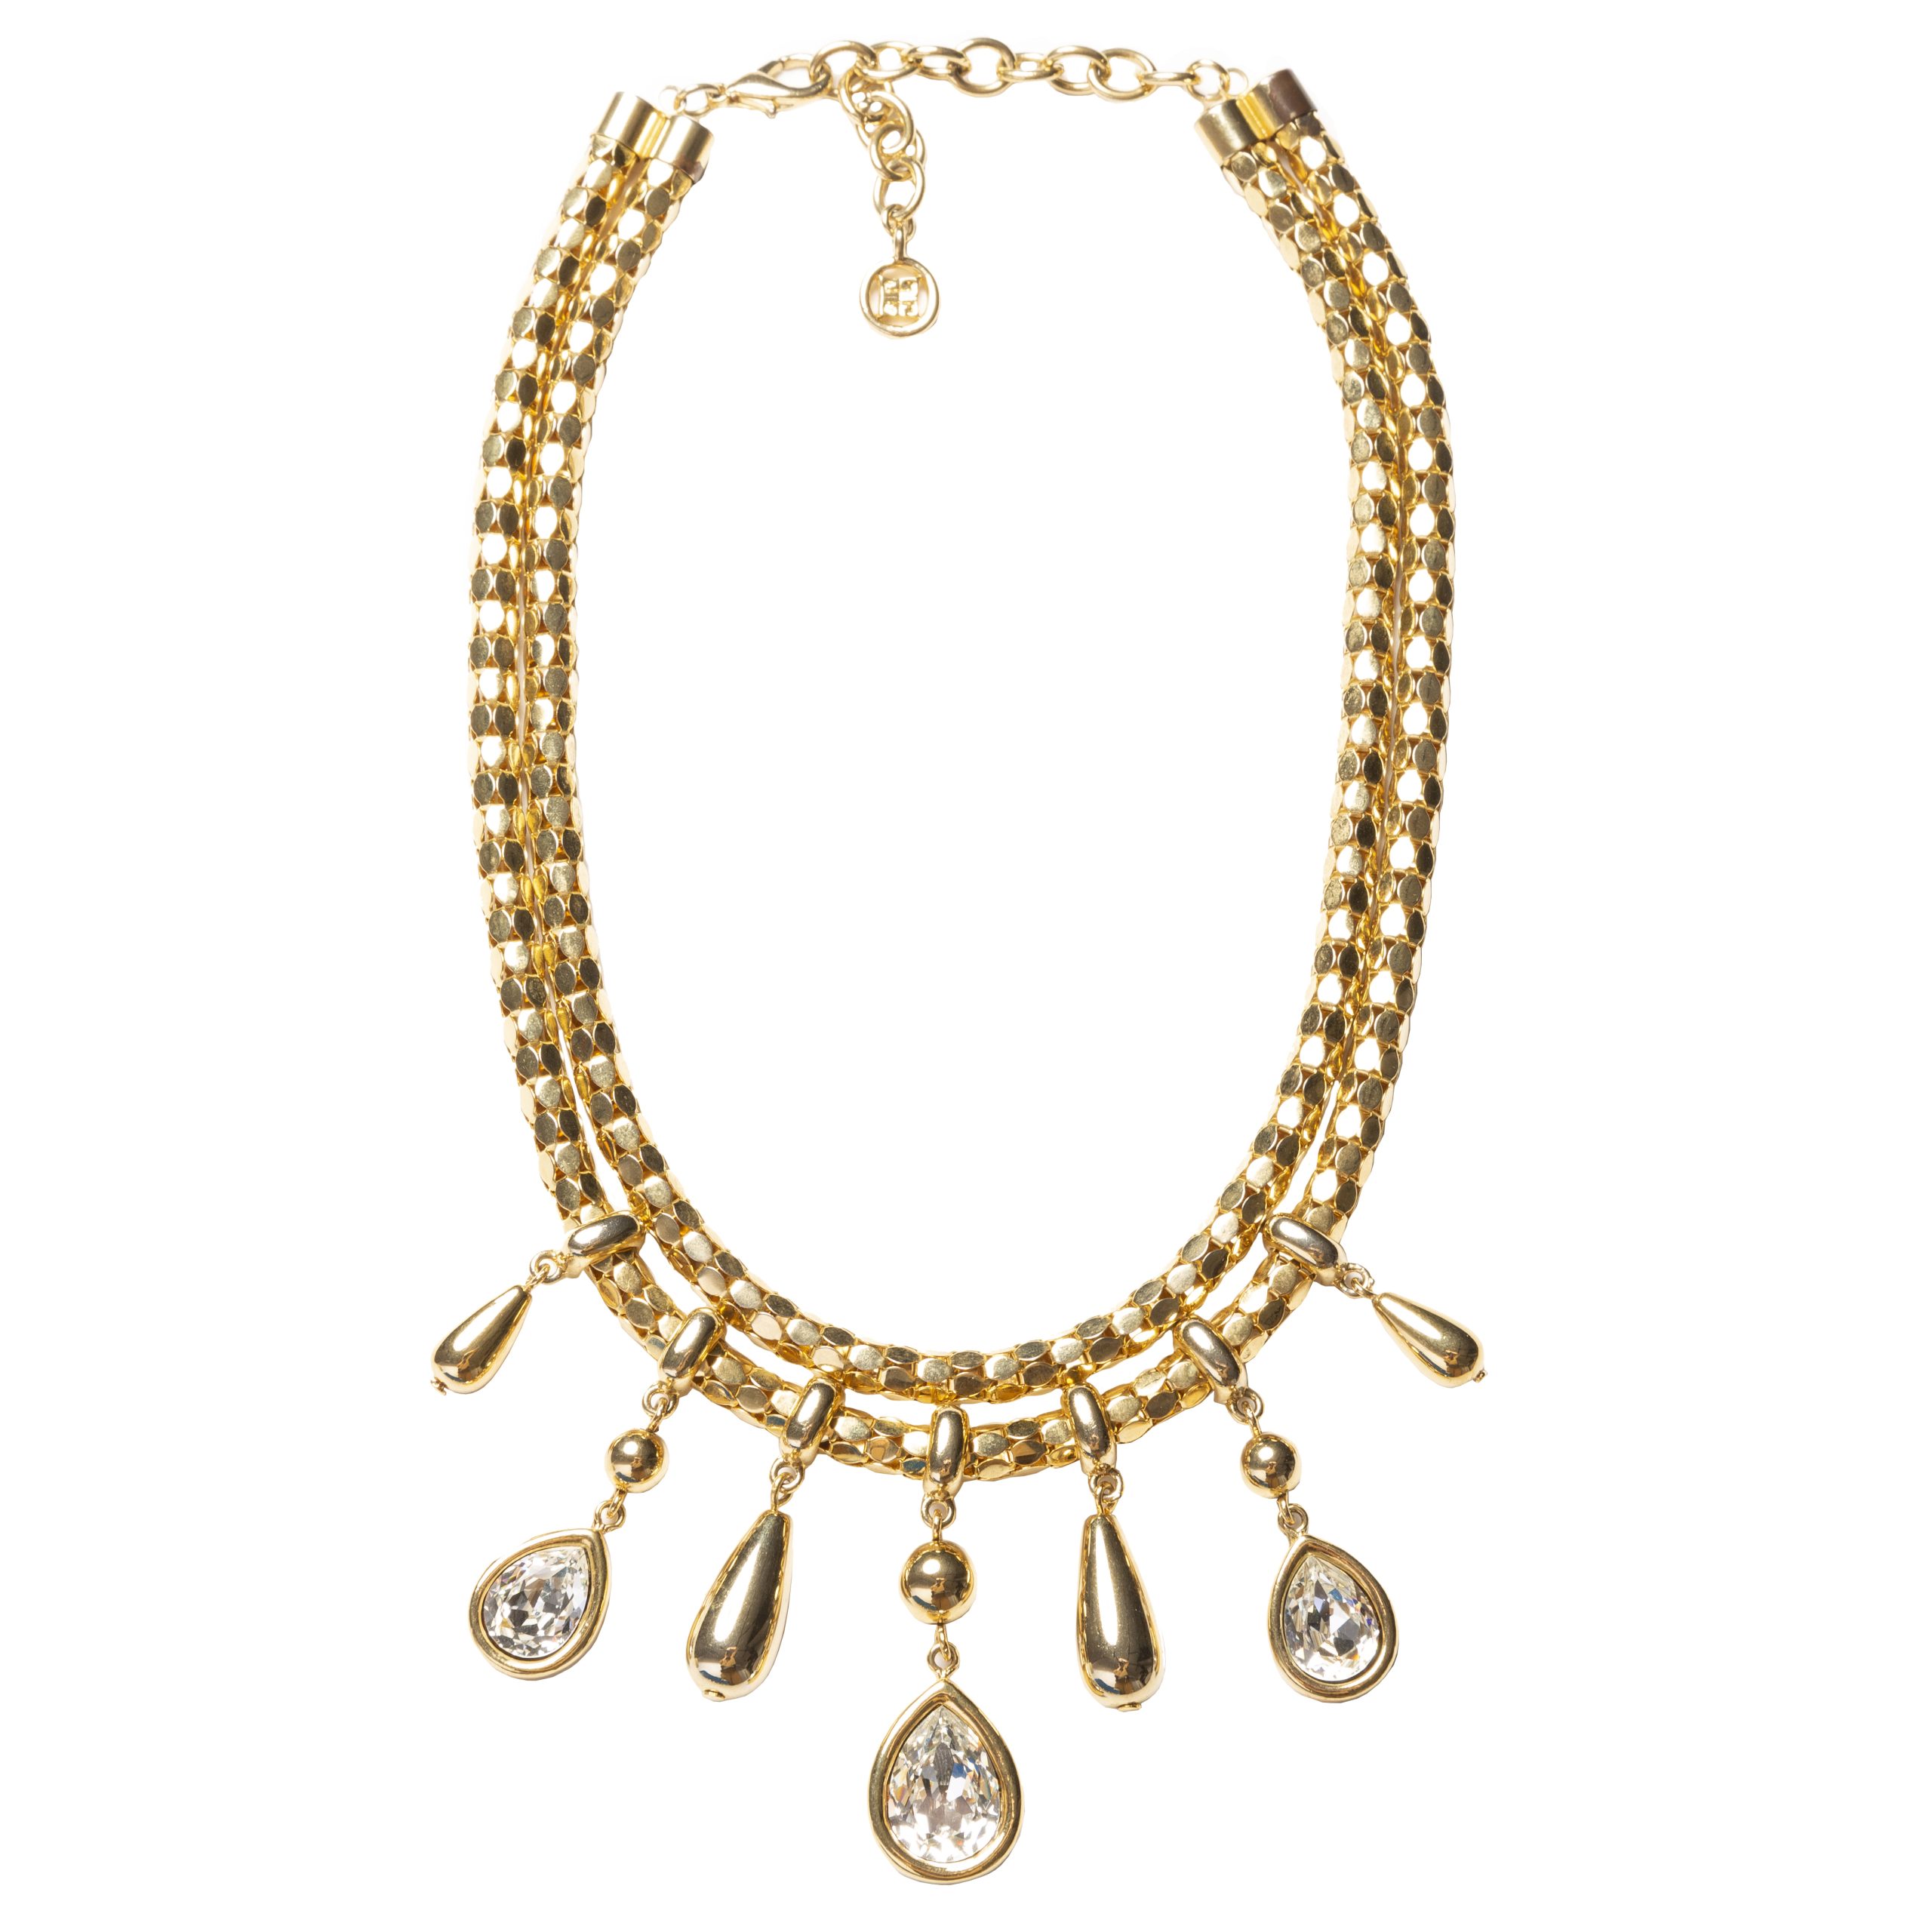 Vintage teardrop crystal chain necklace